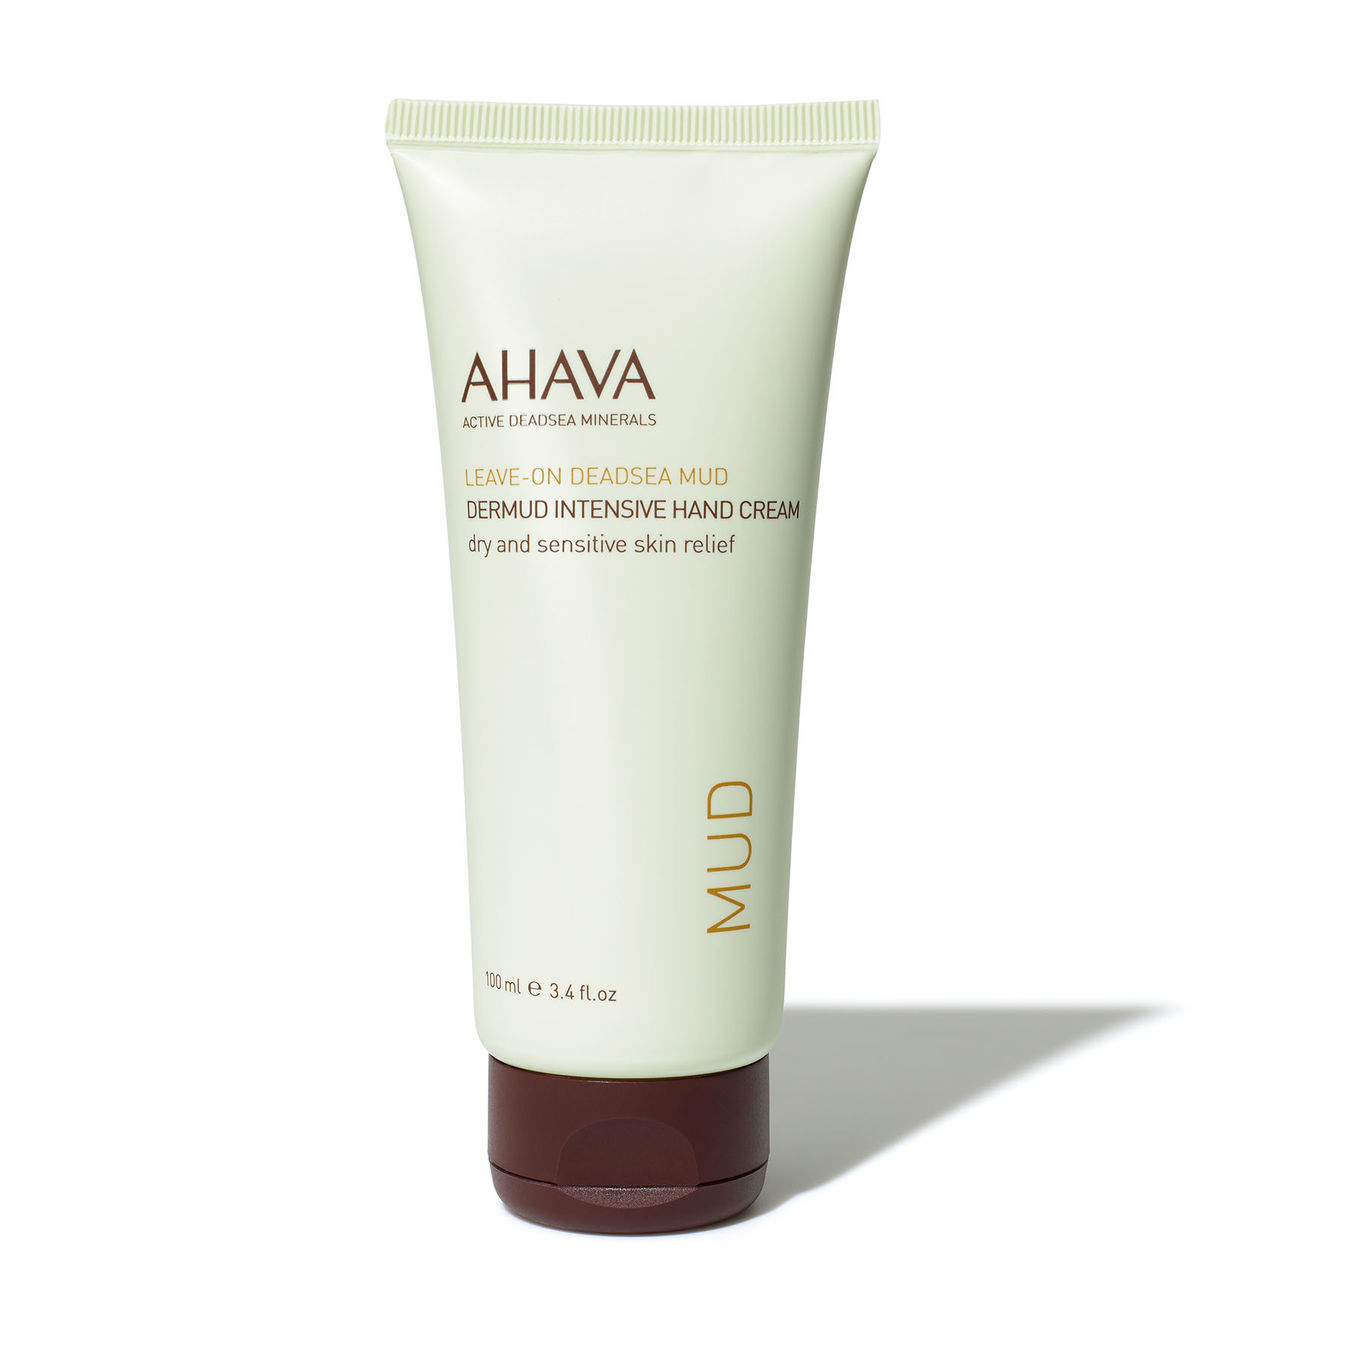 AHAVA Deadsea Mud Intensive Hand Cream